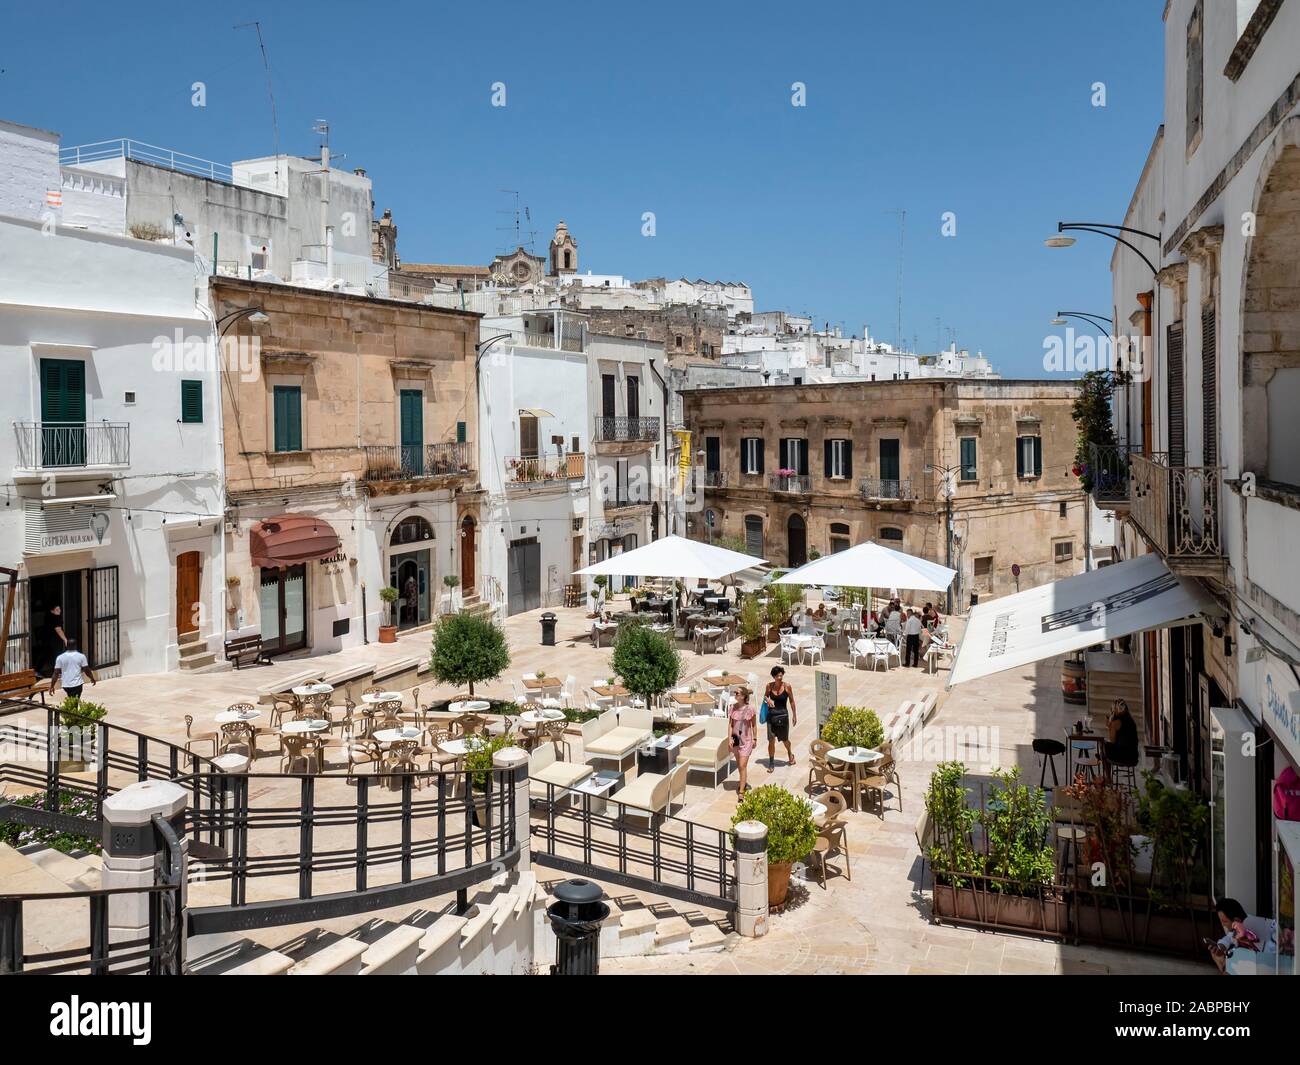 Square in the old town, mountain village, Ostuni, Apulia, Italy Stock Photo